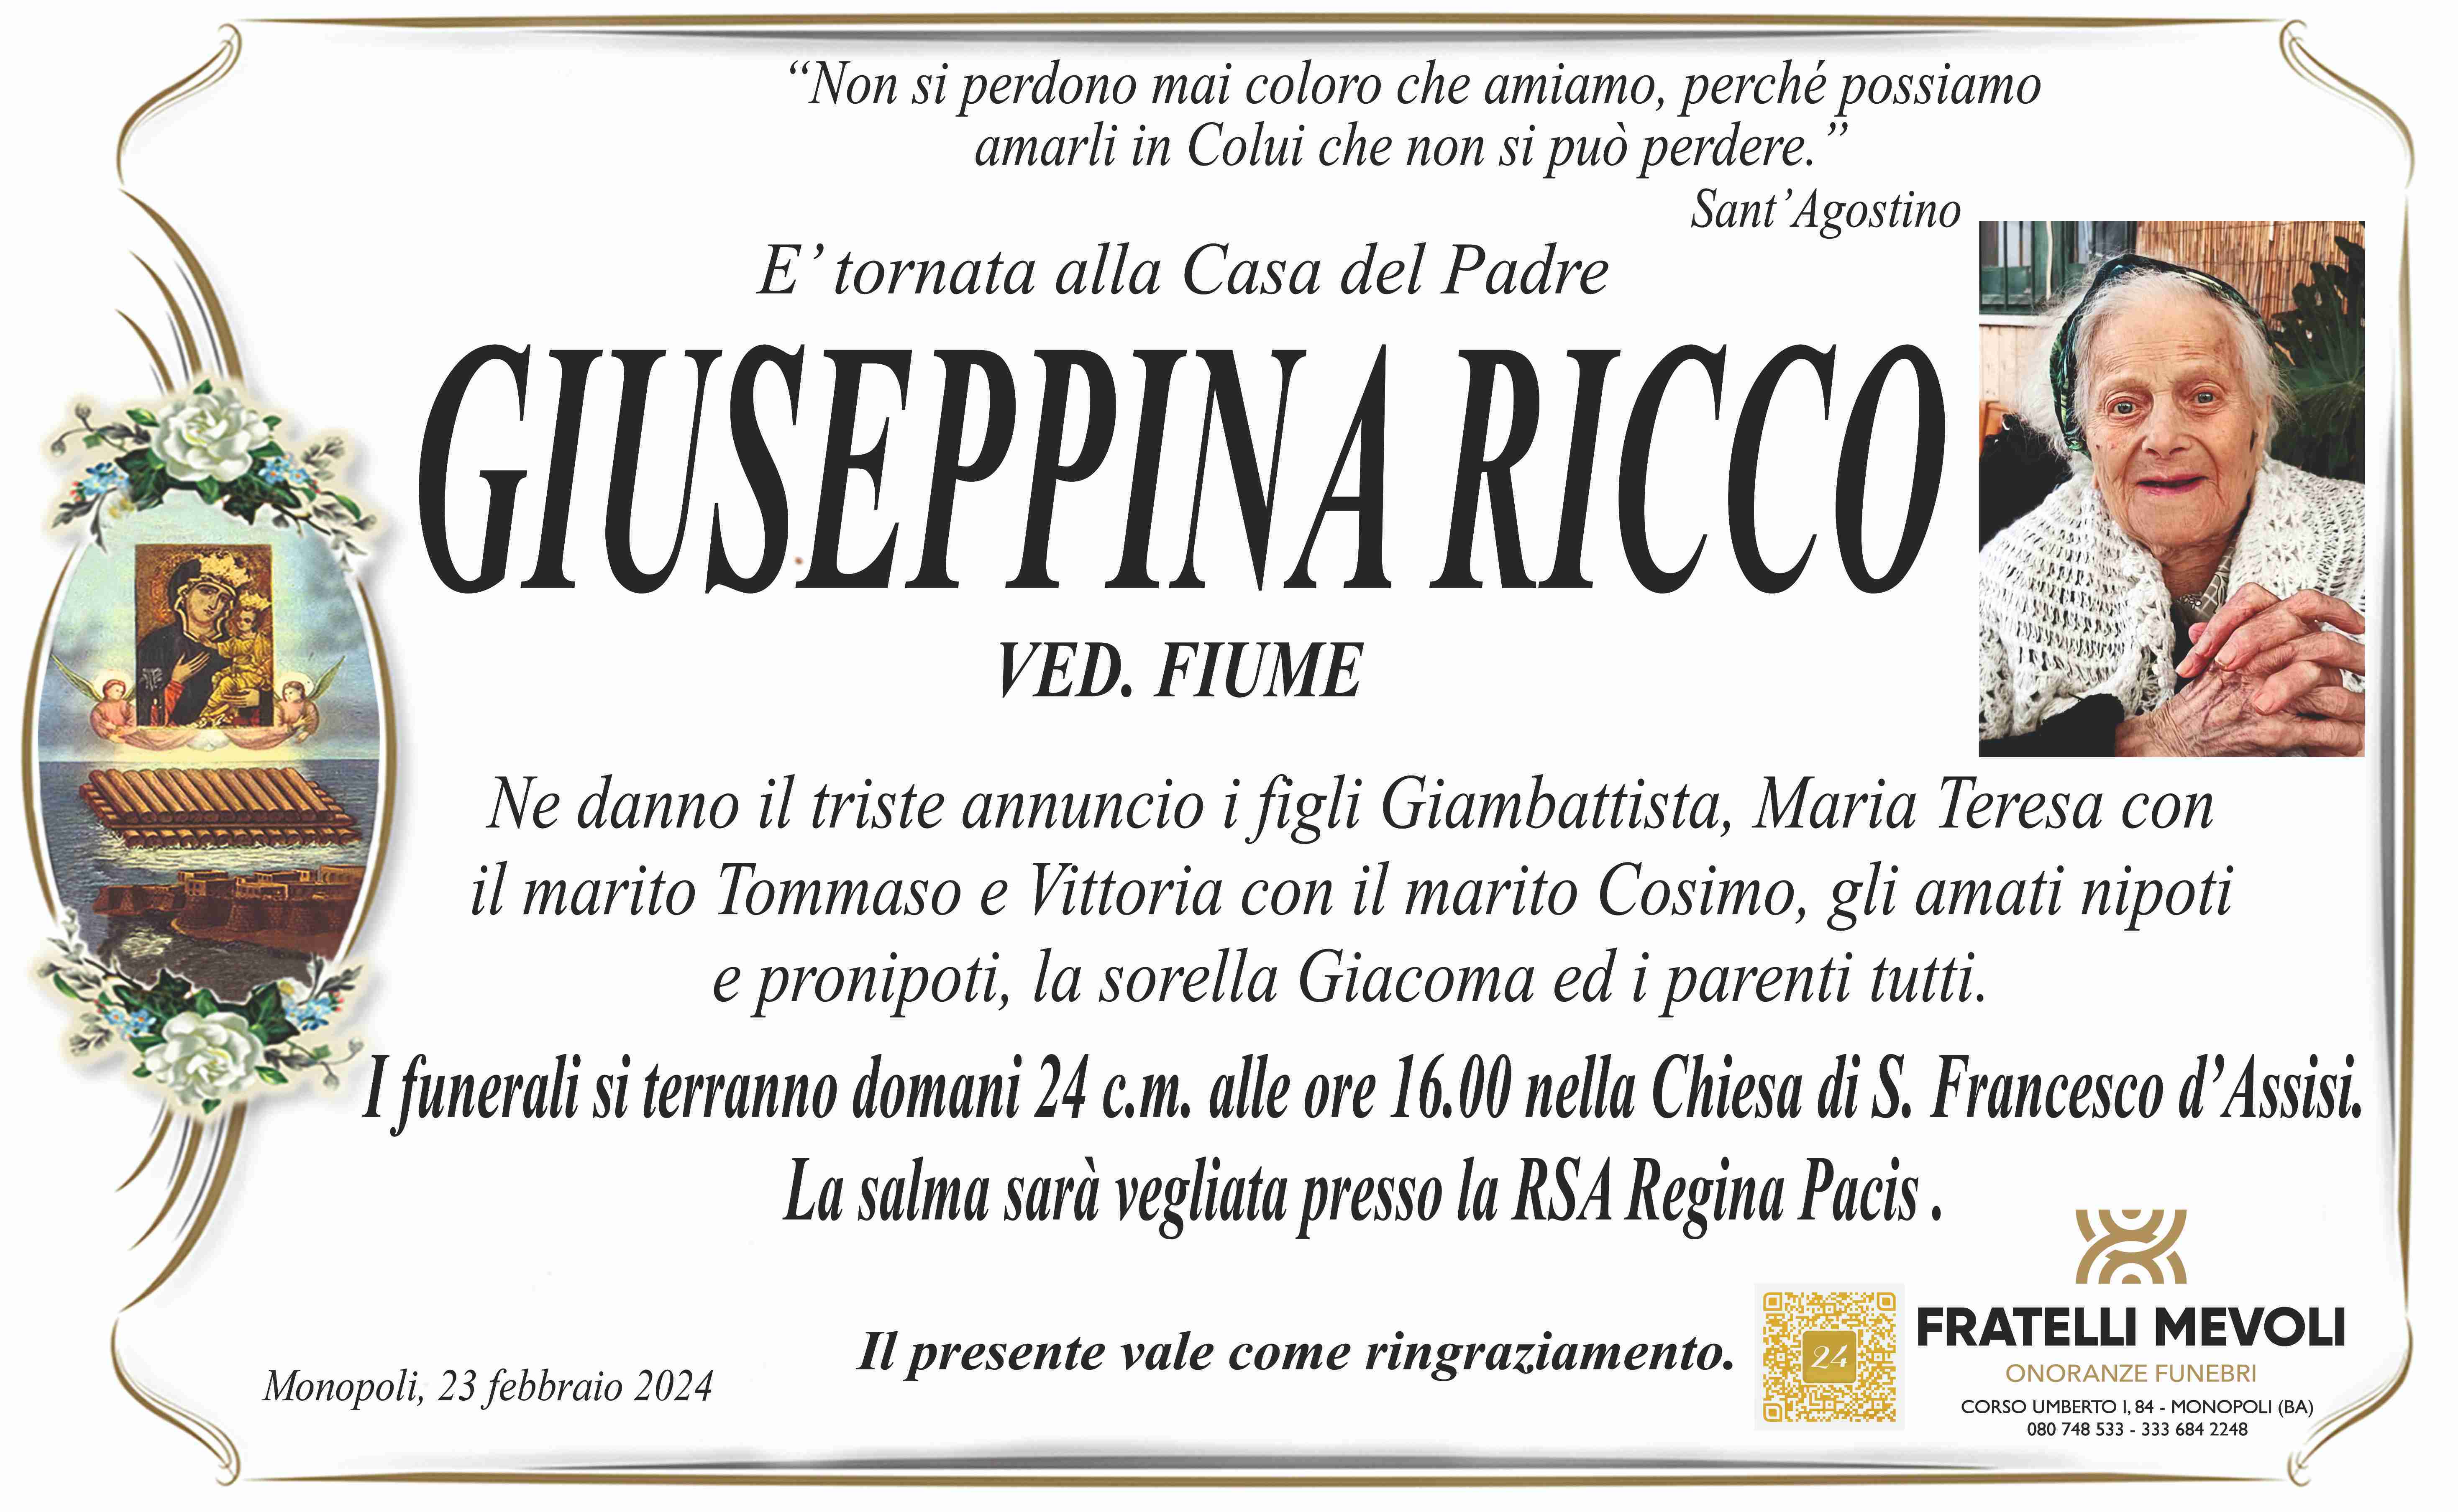 Giuseppina Ricco